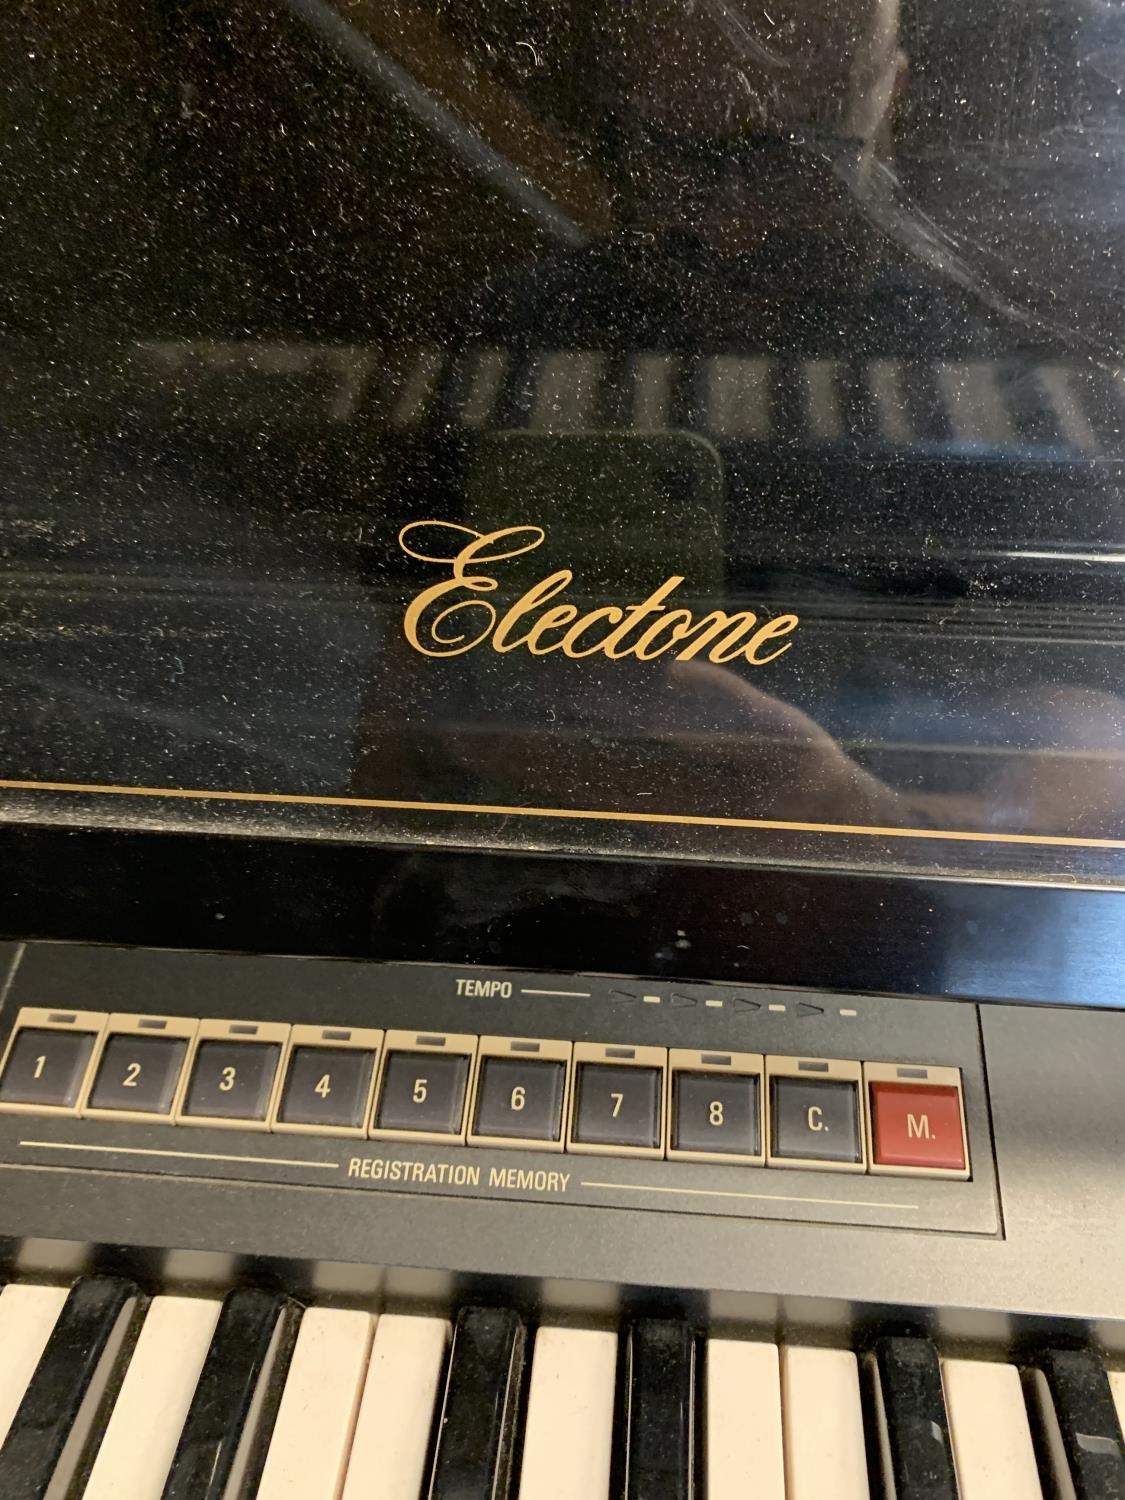 A Yamaha Electone organ, 108cm x 90cm x 45cm - Image 2 of 4